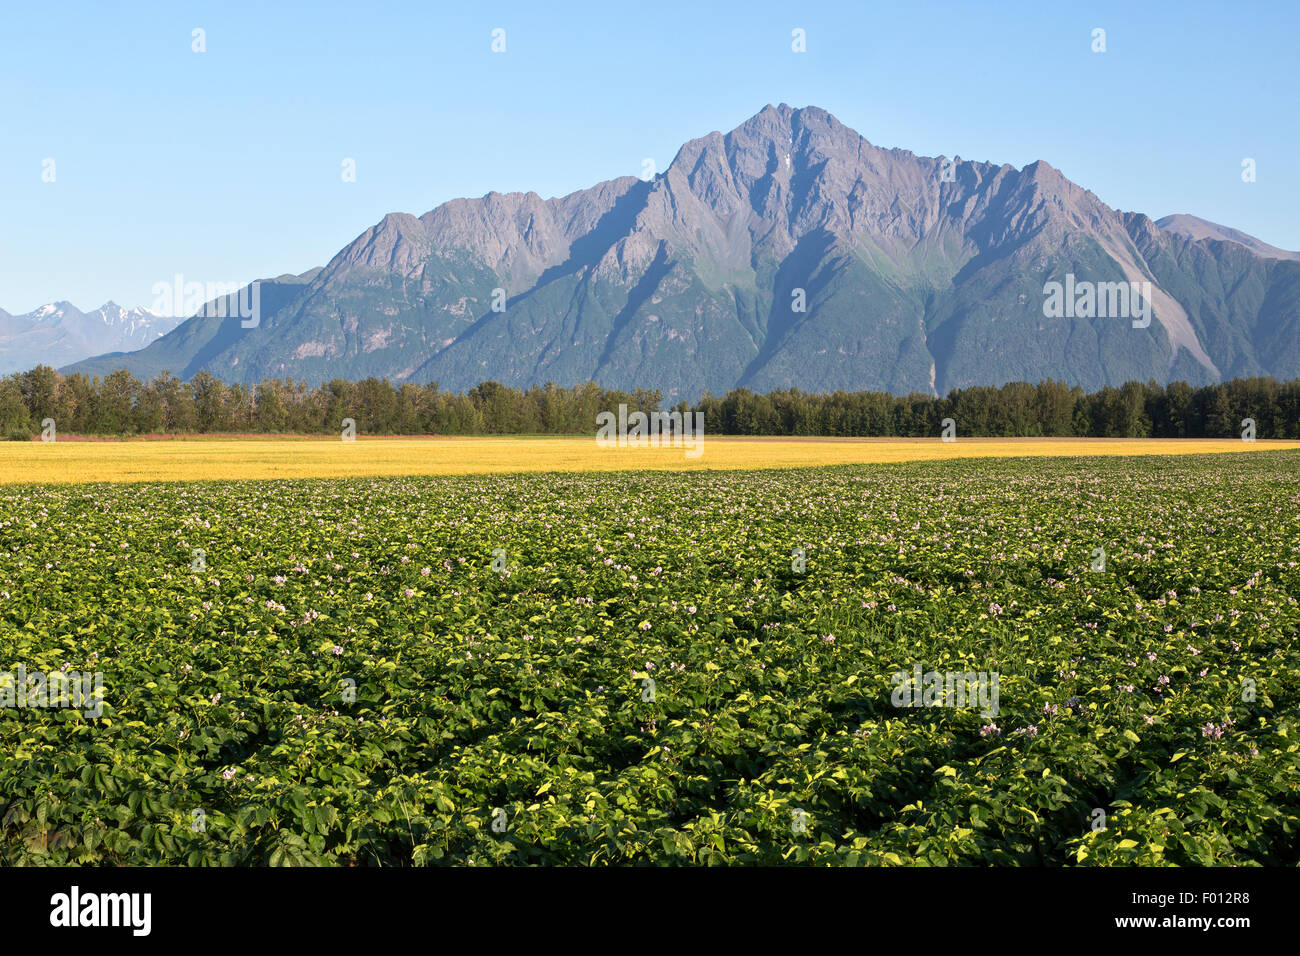 Flowering potato field, maturing wheat,  Pioneer Peak in the distance.. Stock Photo